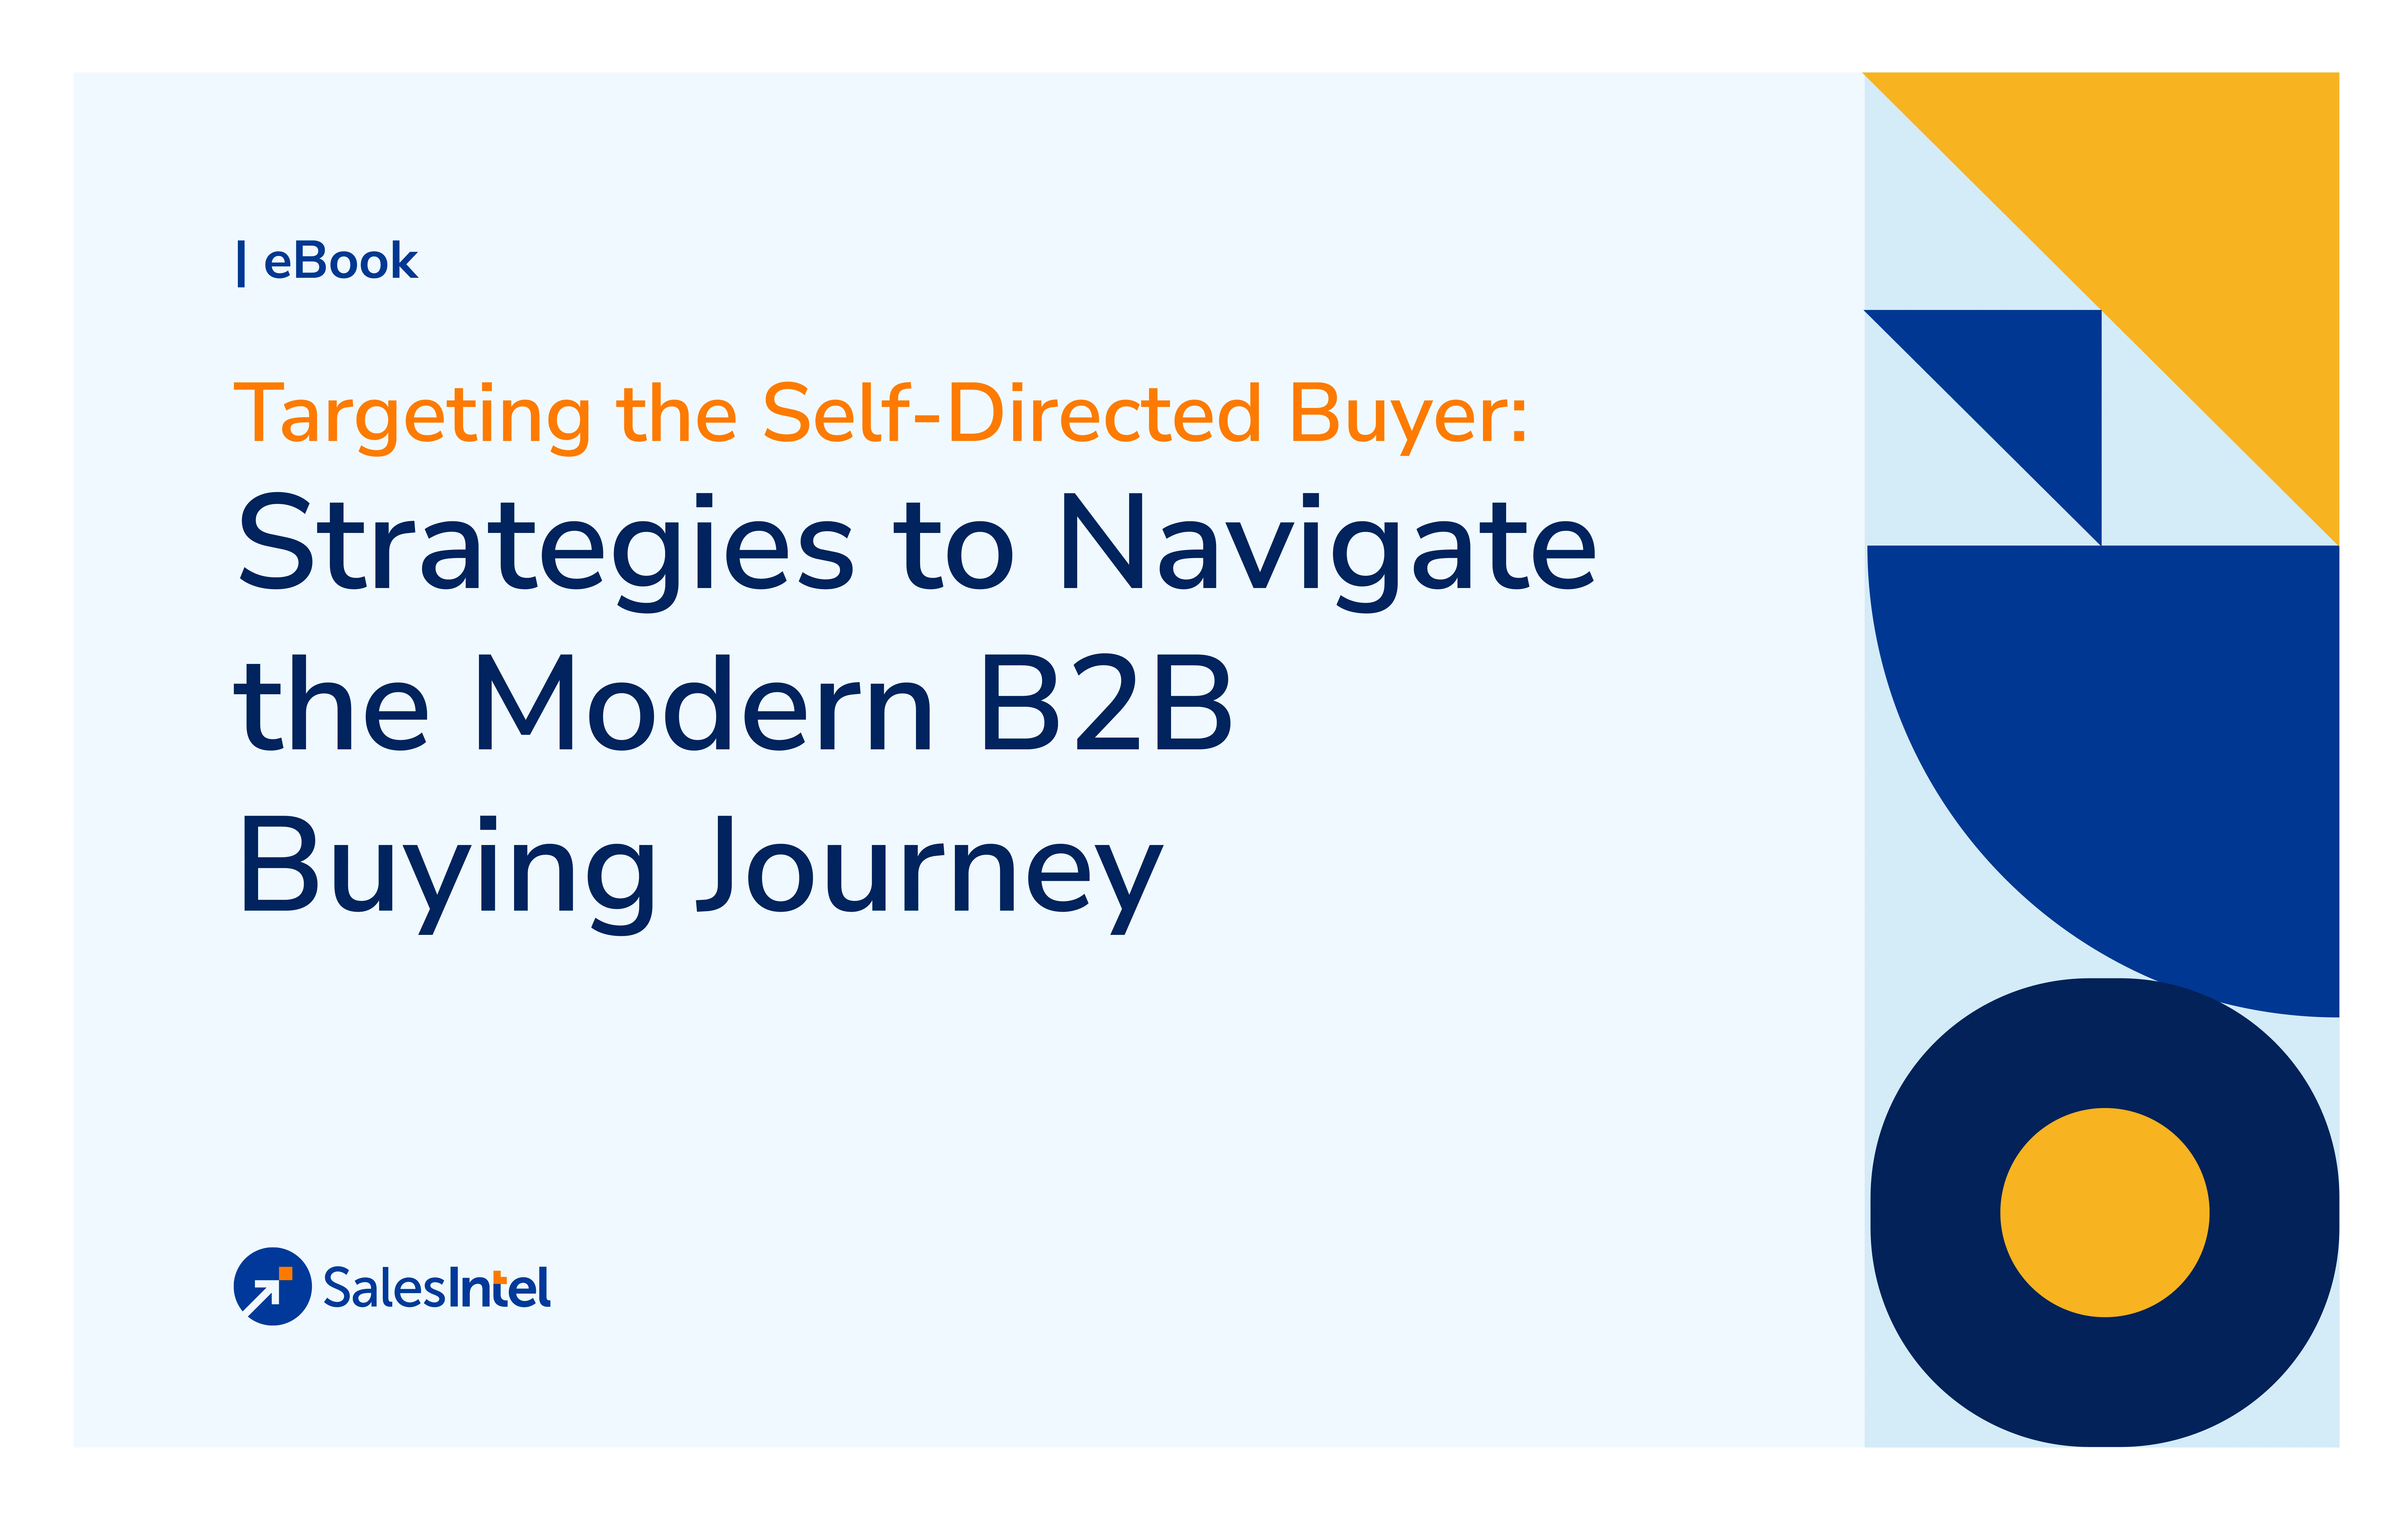 EBook: Targeting the Self-Directed Buyer: Strategies to Navigate the Modern B2B Buying Journey